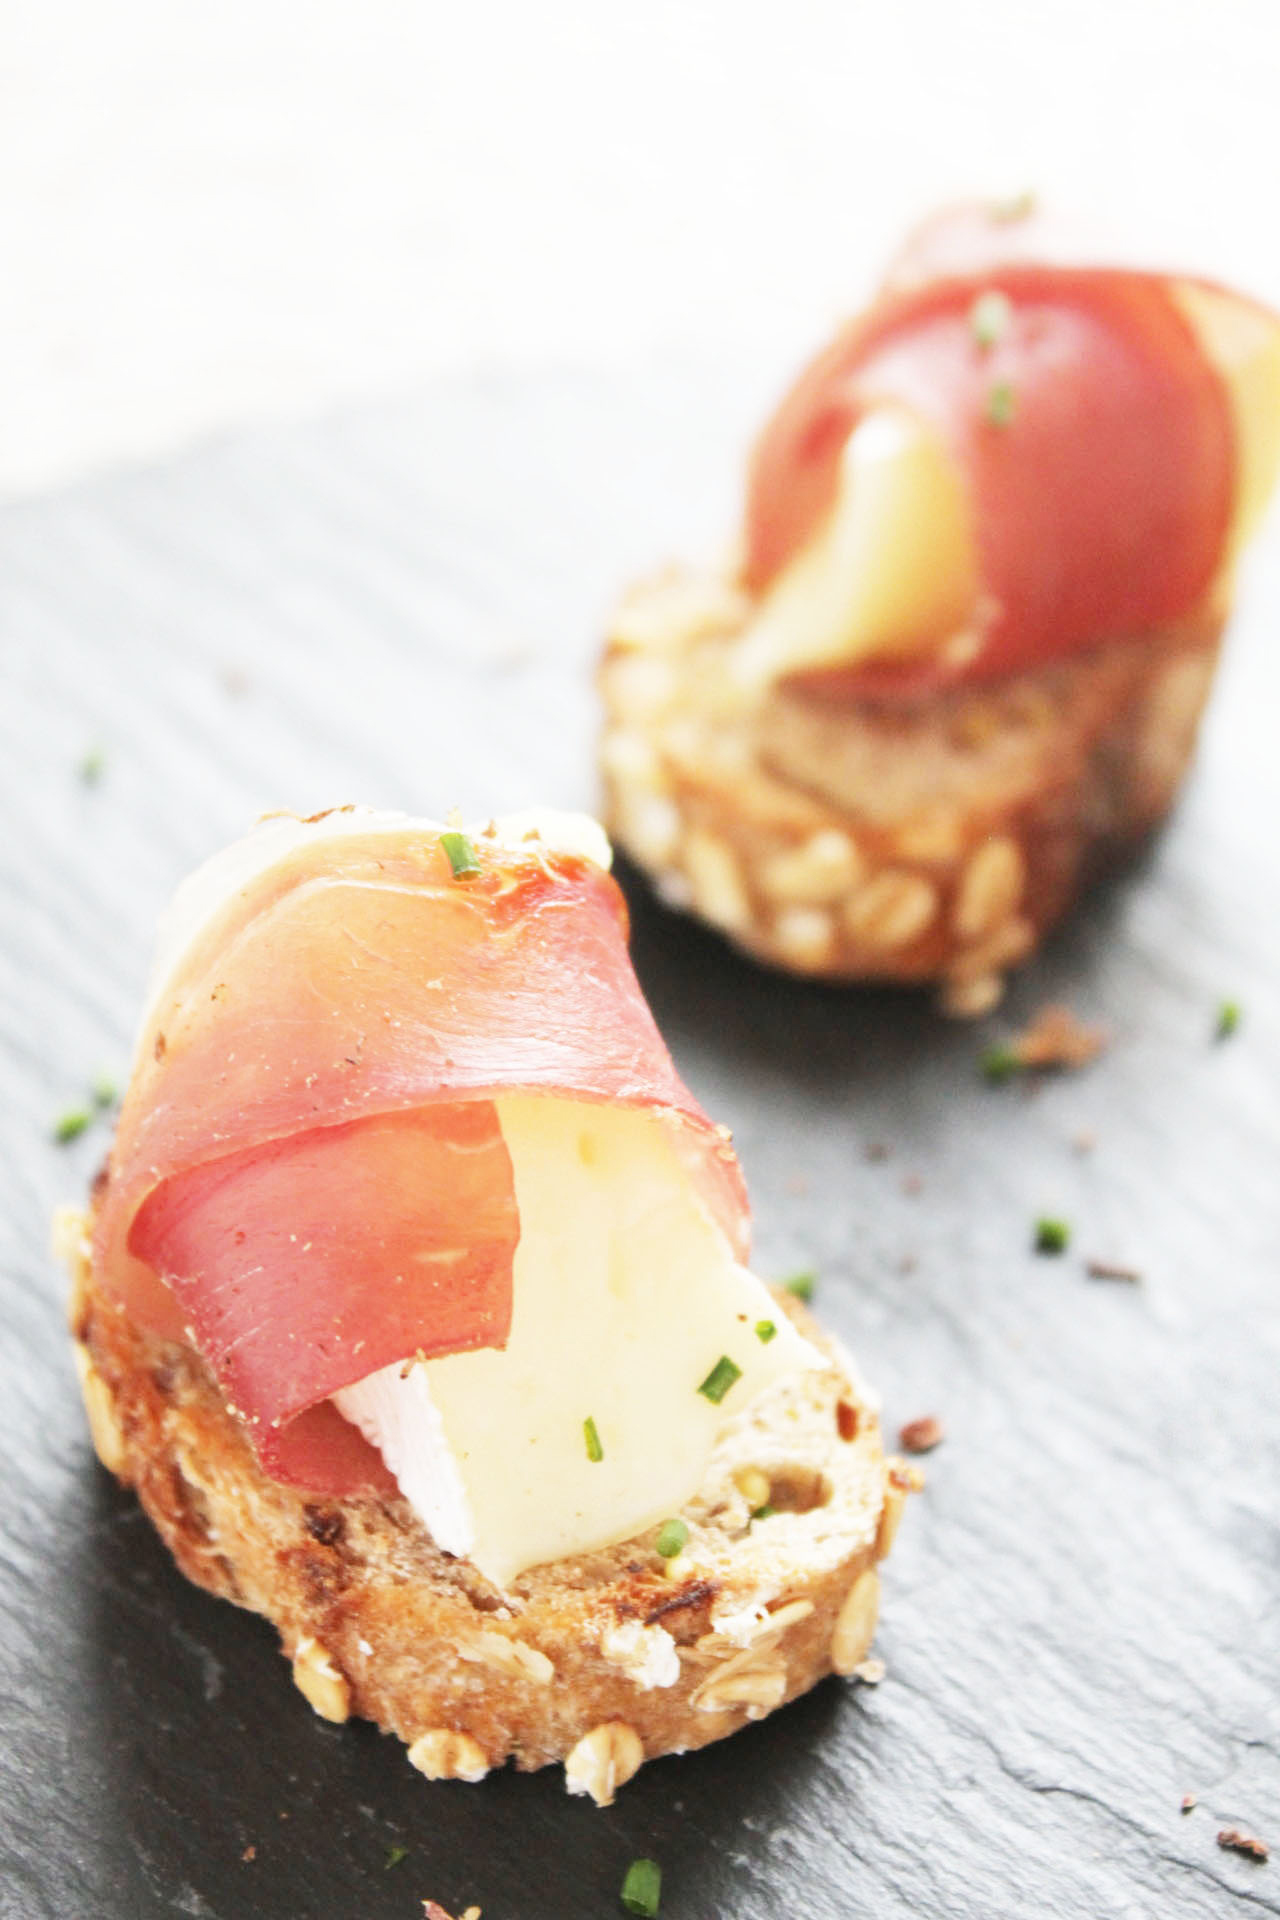 Camembert “Petits fagots” with cured ham